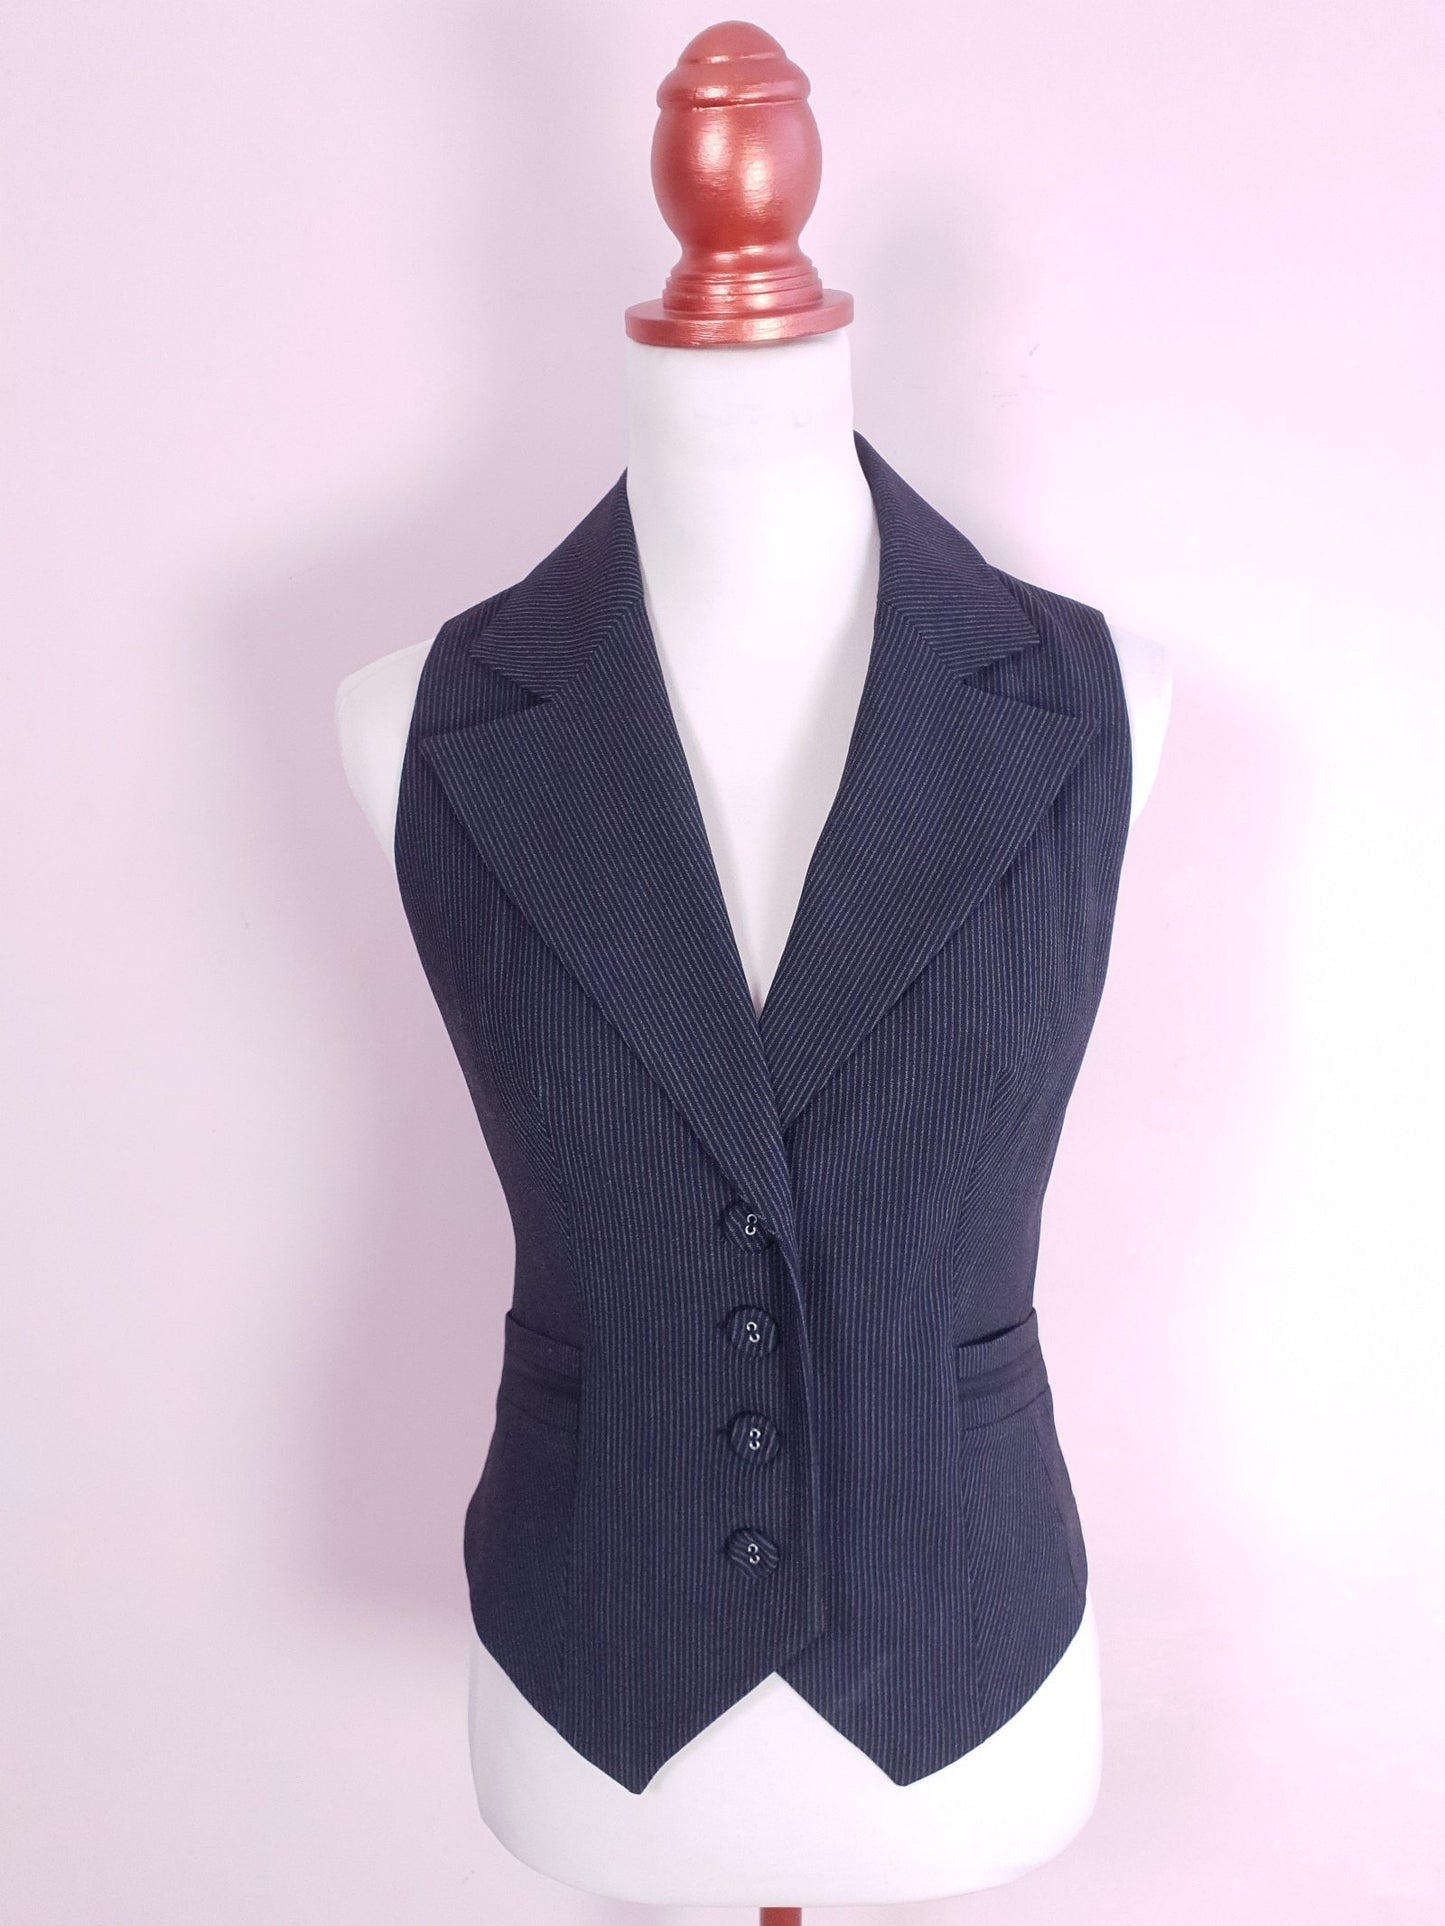 Cool 90s Vintage Black Striped Waistcoat Vest - Size 12